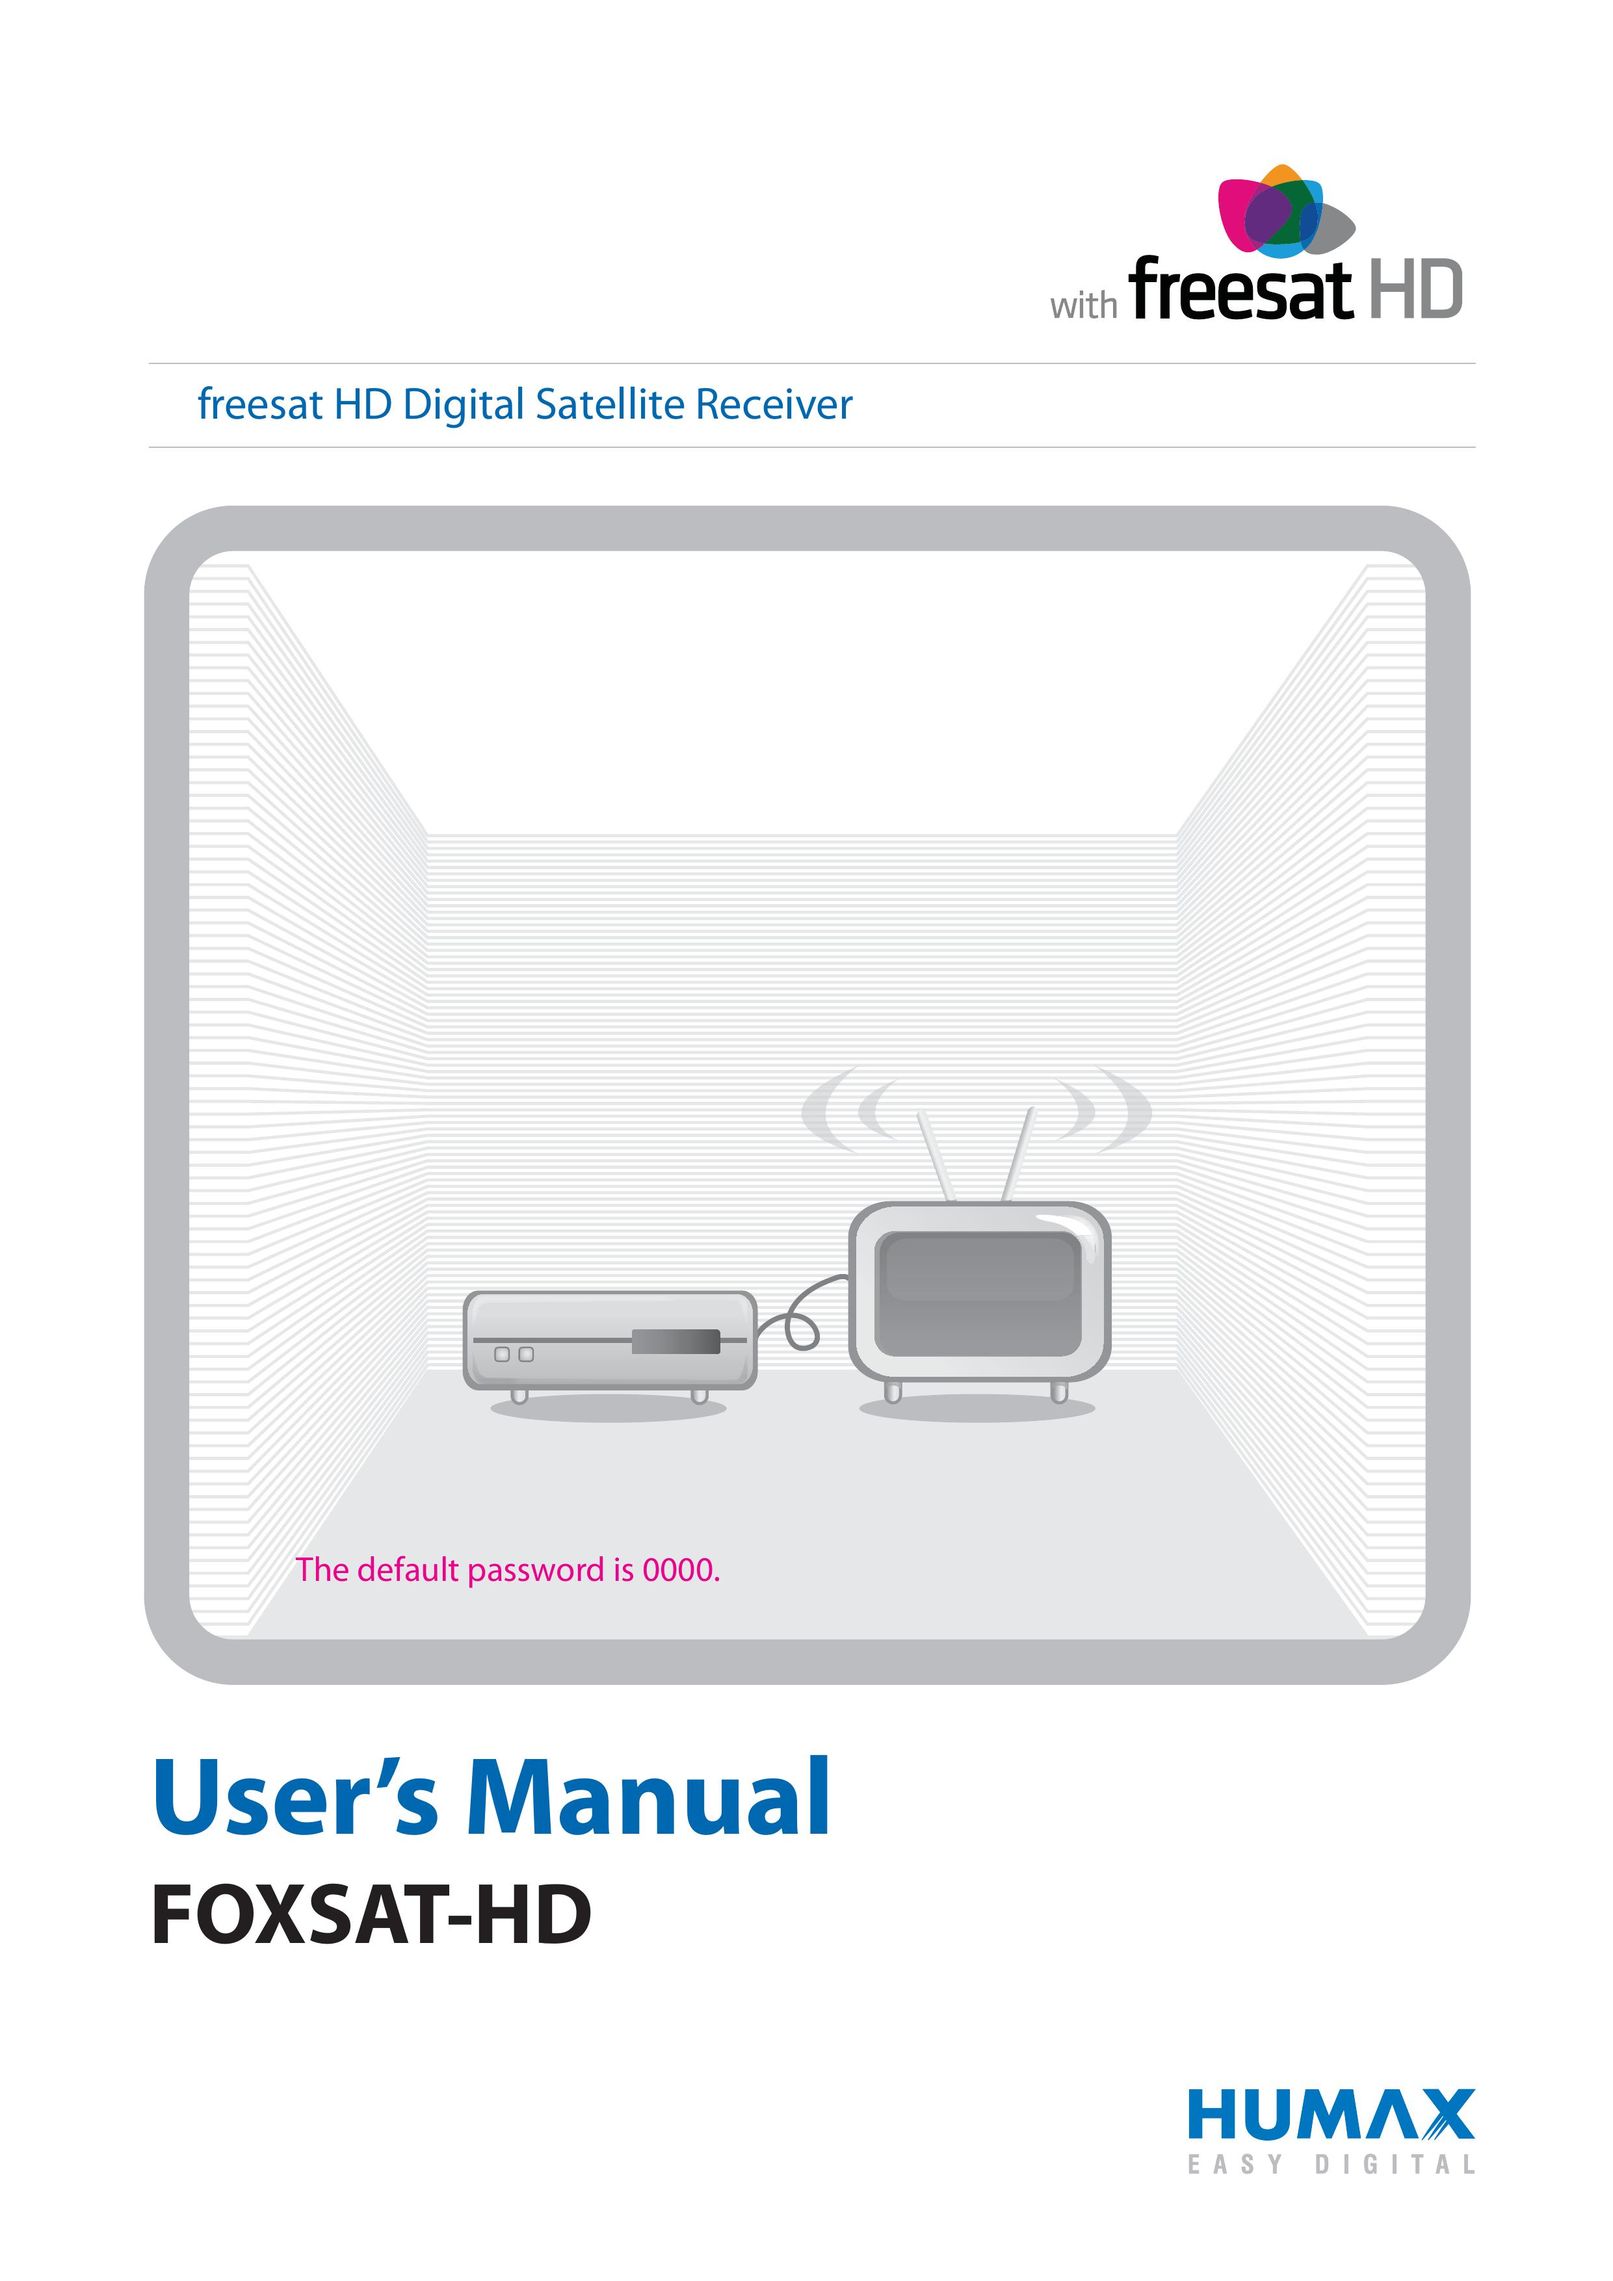 Humax FOXSAT-HD Satellite TV System User Manual